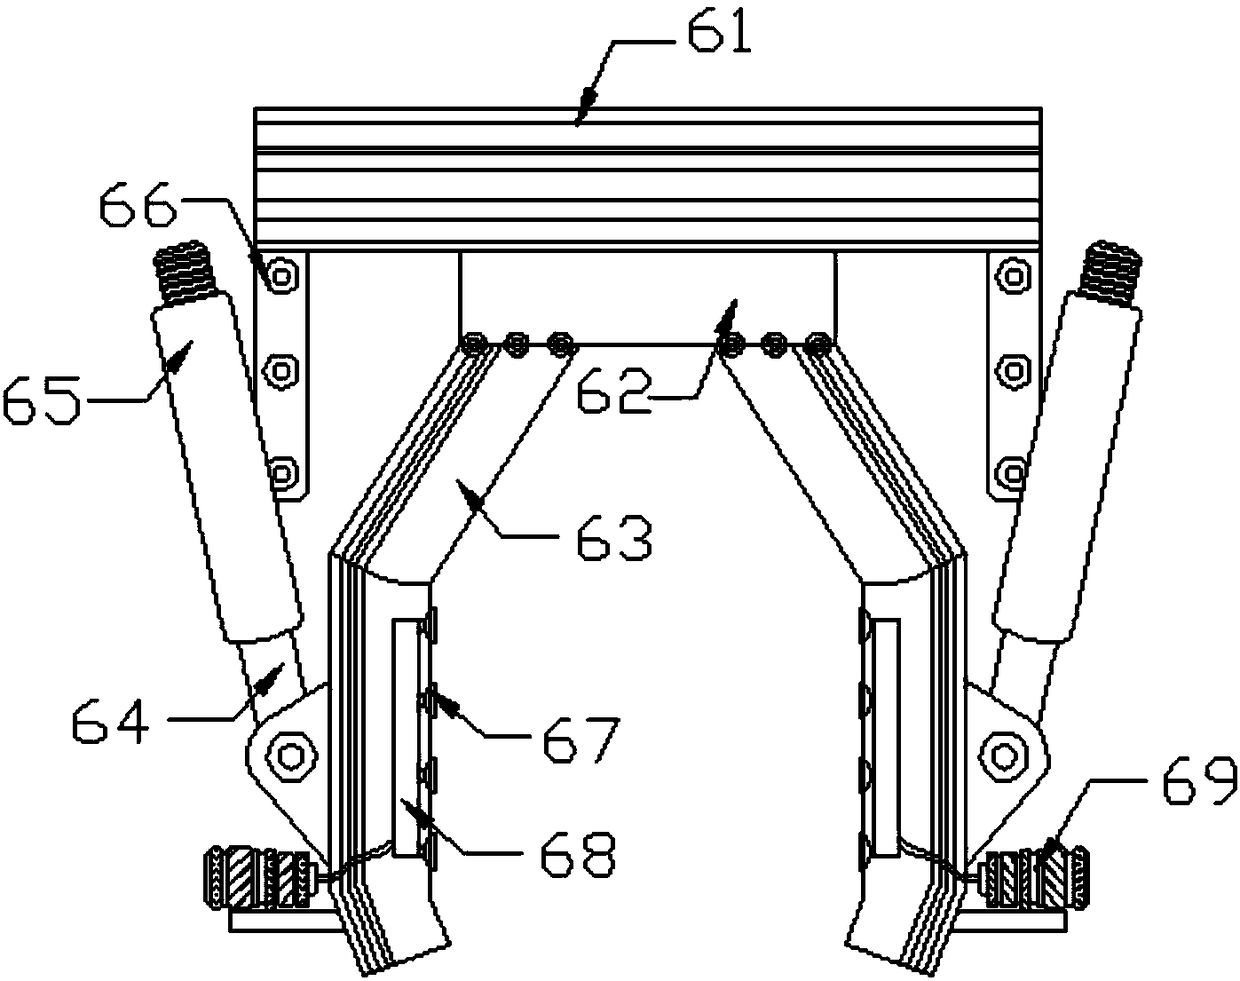 Precise clamping rotary hydraulic manipulator